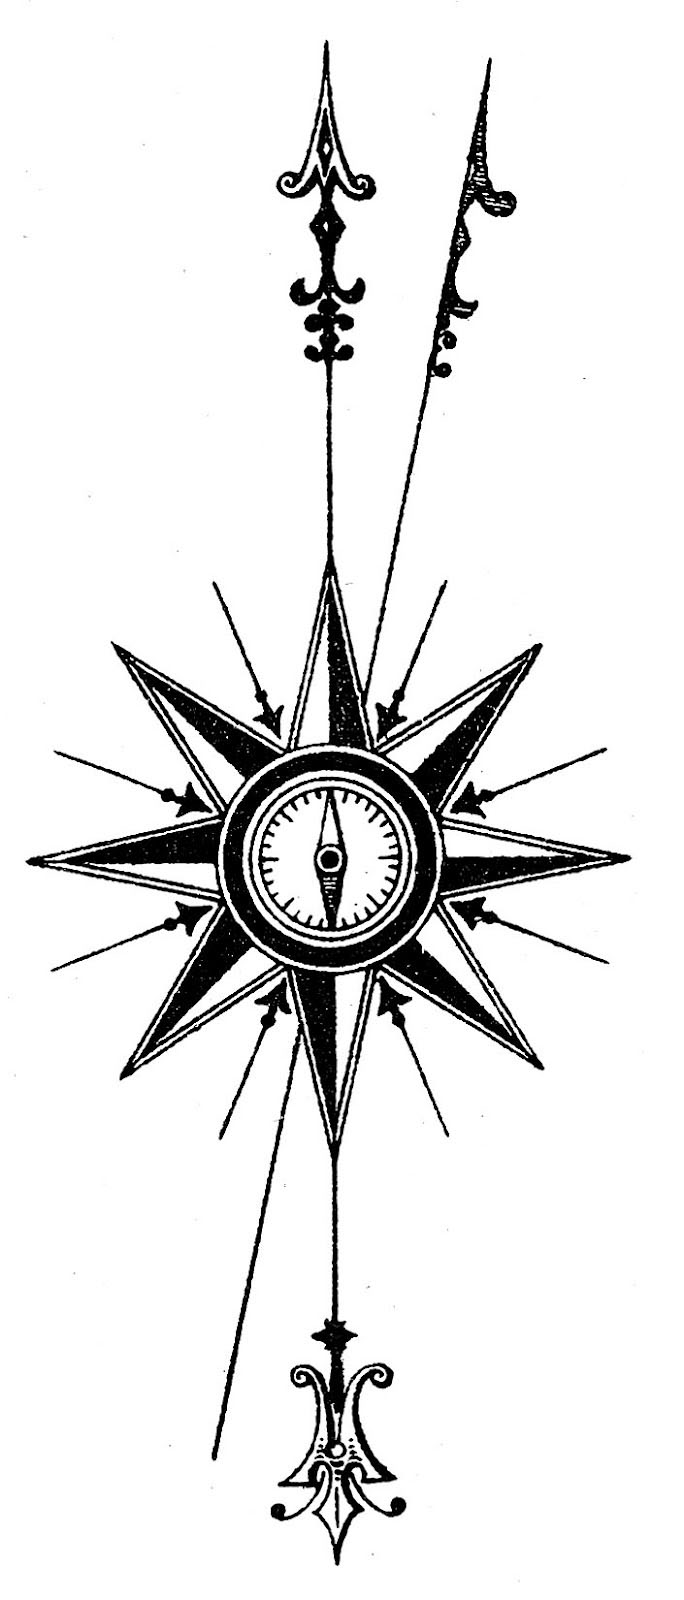 12+ Thousand Compass Diagram Royalty-Free Images, Stock Photos